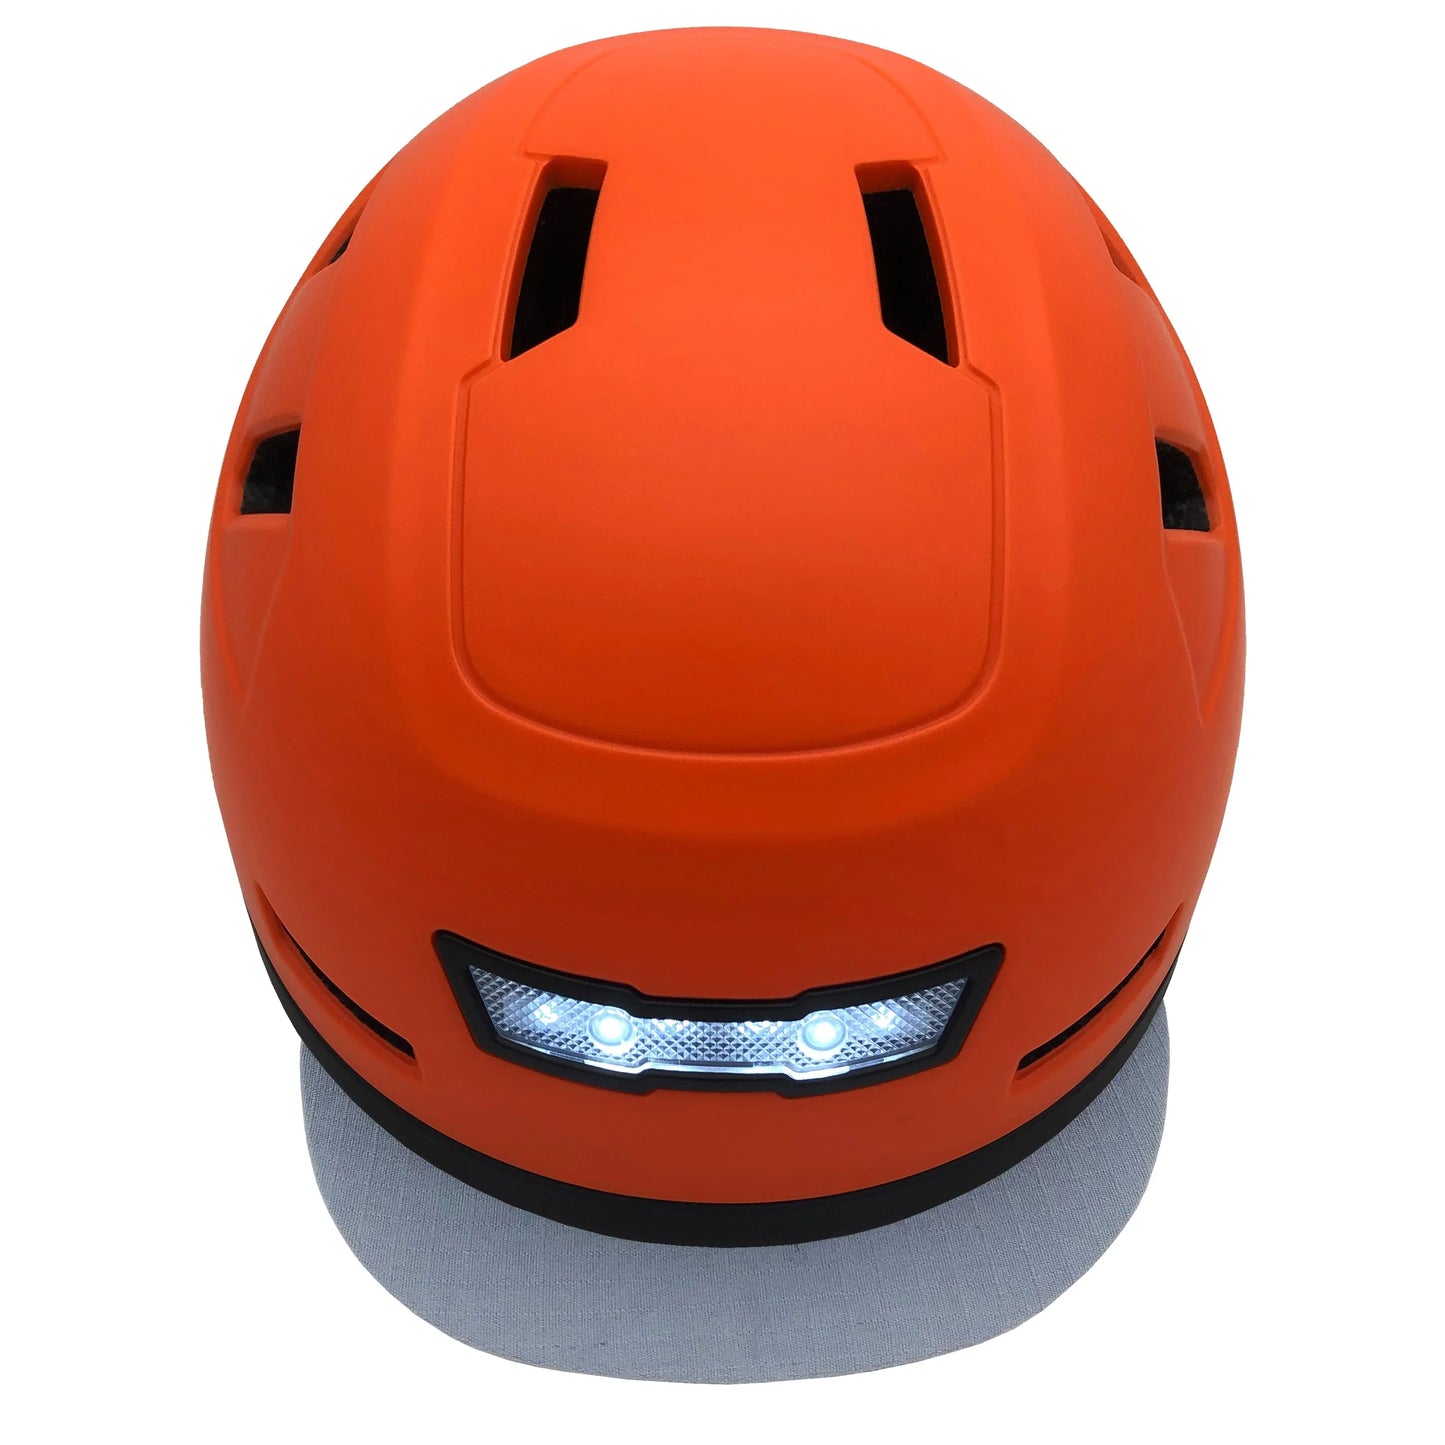 Moss | XNITO Helmet | E-Bike Helmet